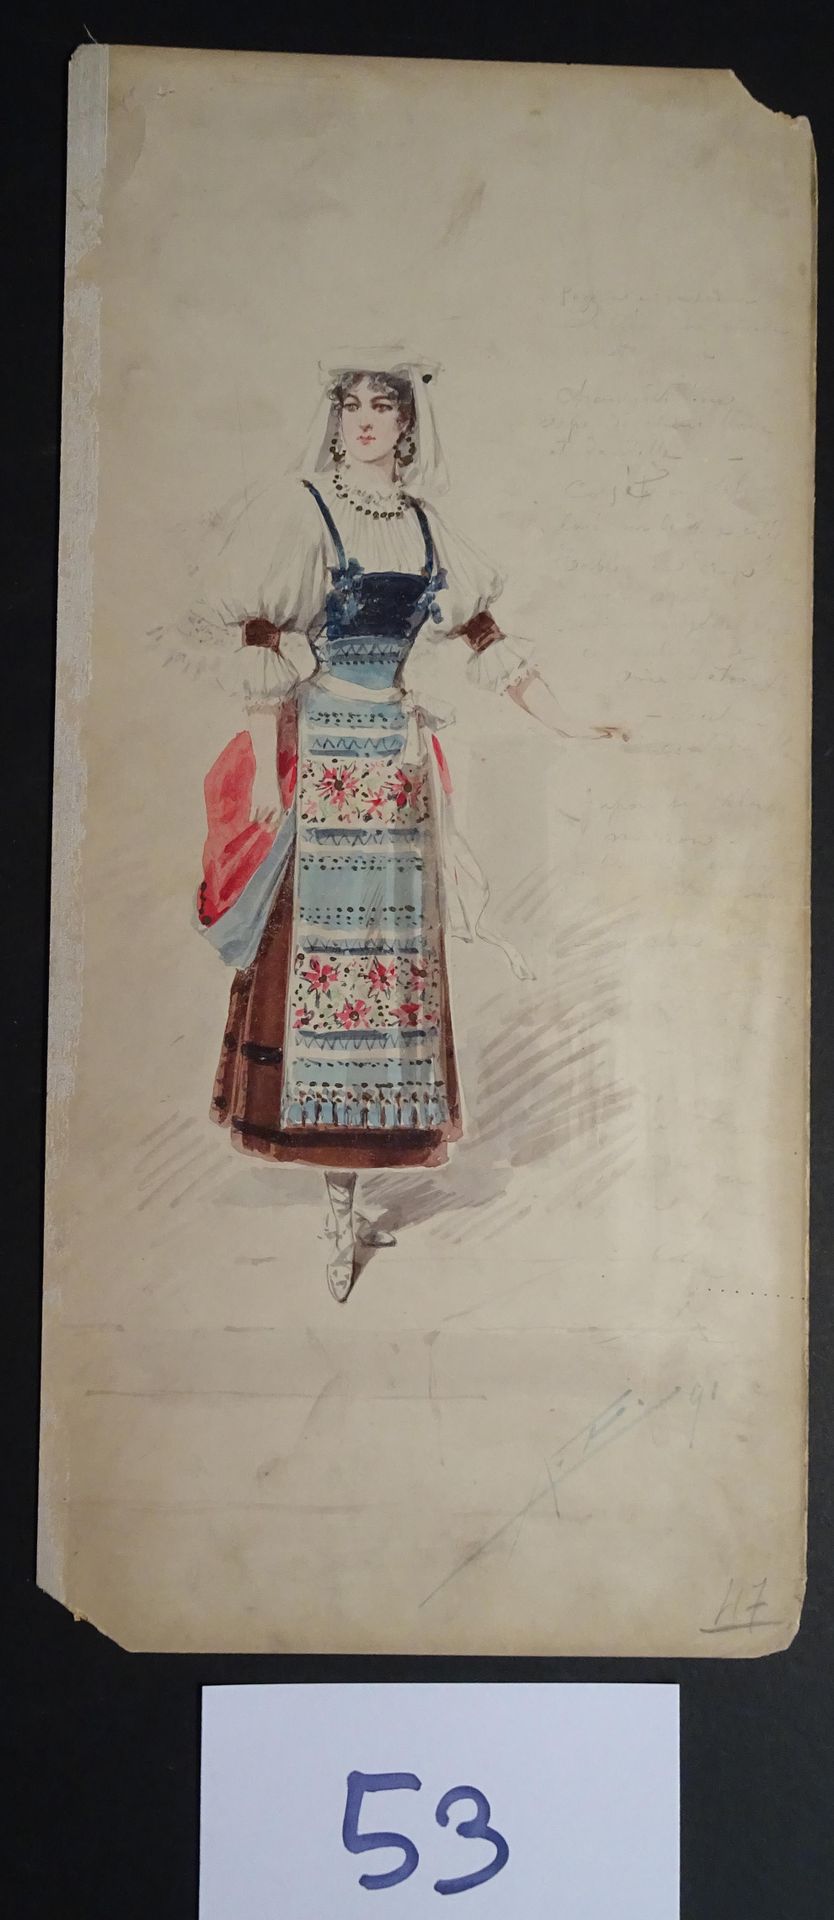 EDEL EDEL ALFREDO ( 1859-1912)

"Frau mit blumigem Kleid". Gouache, Aquarell und&hellip;